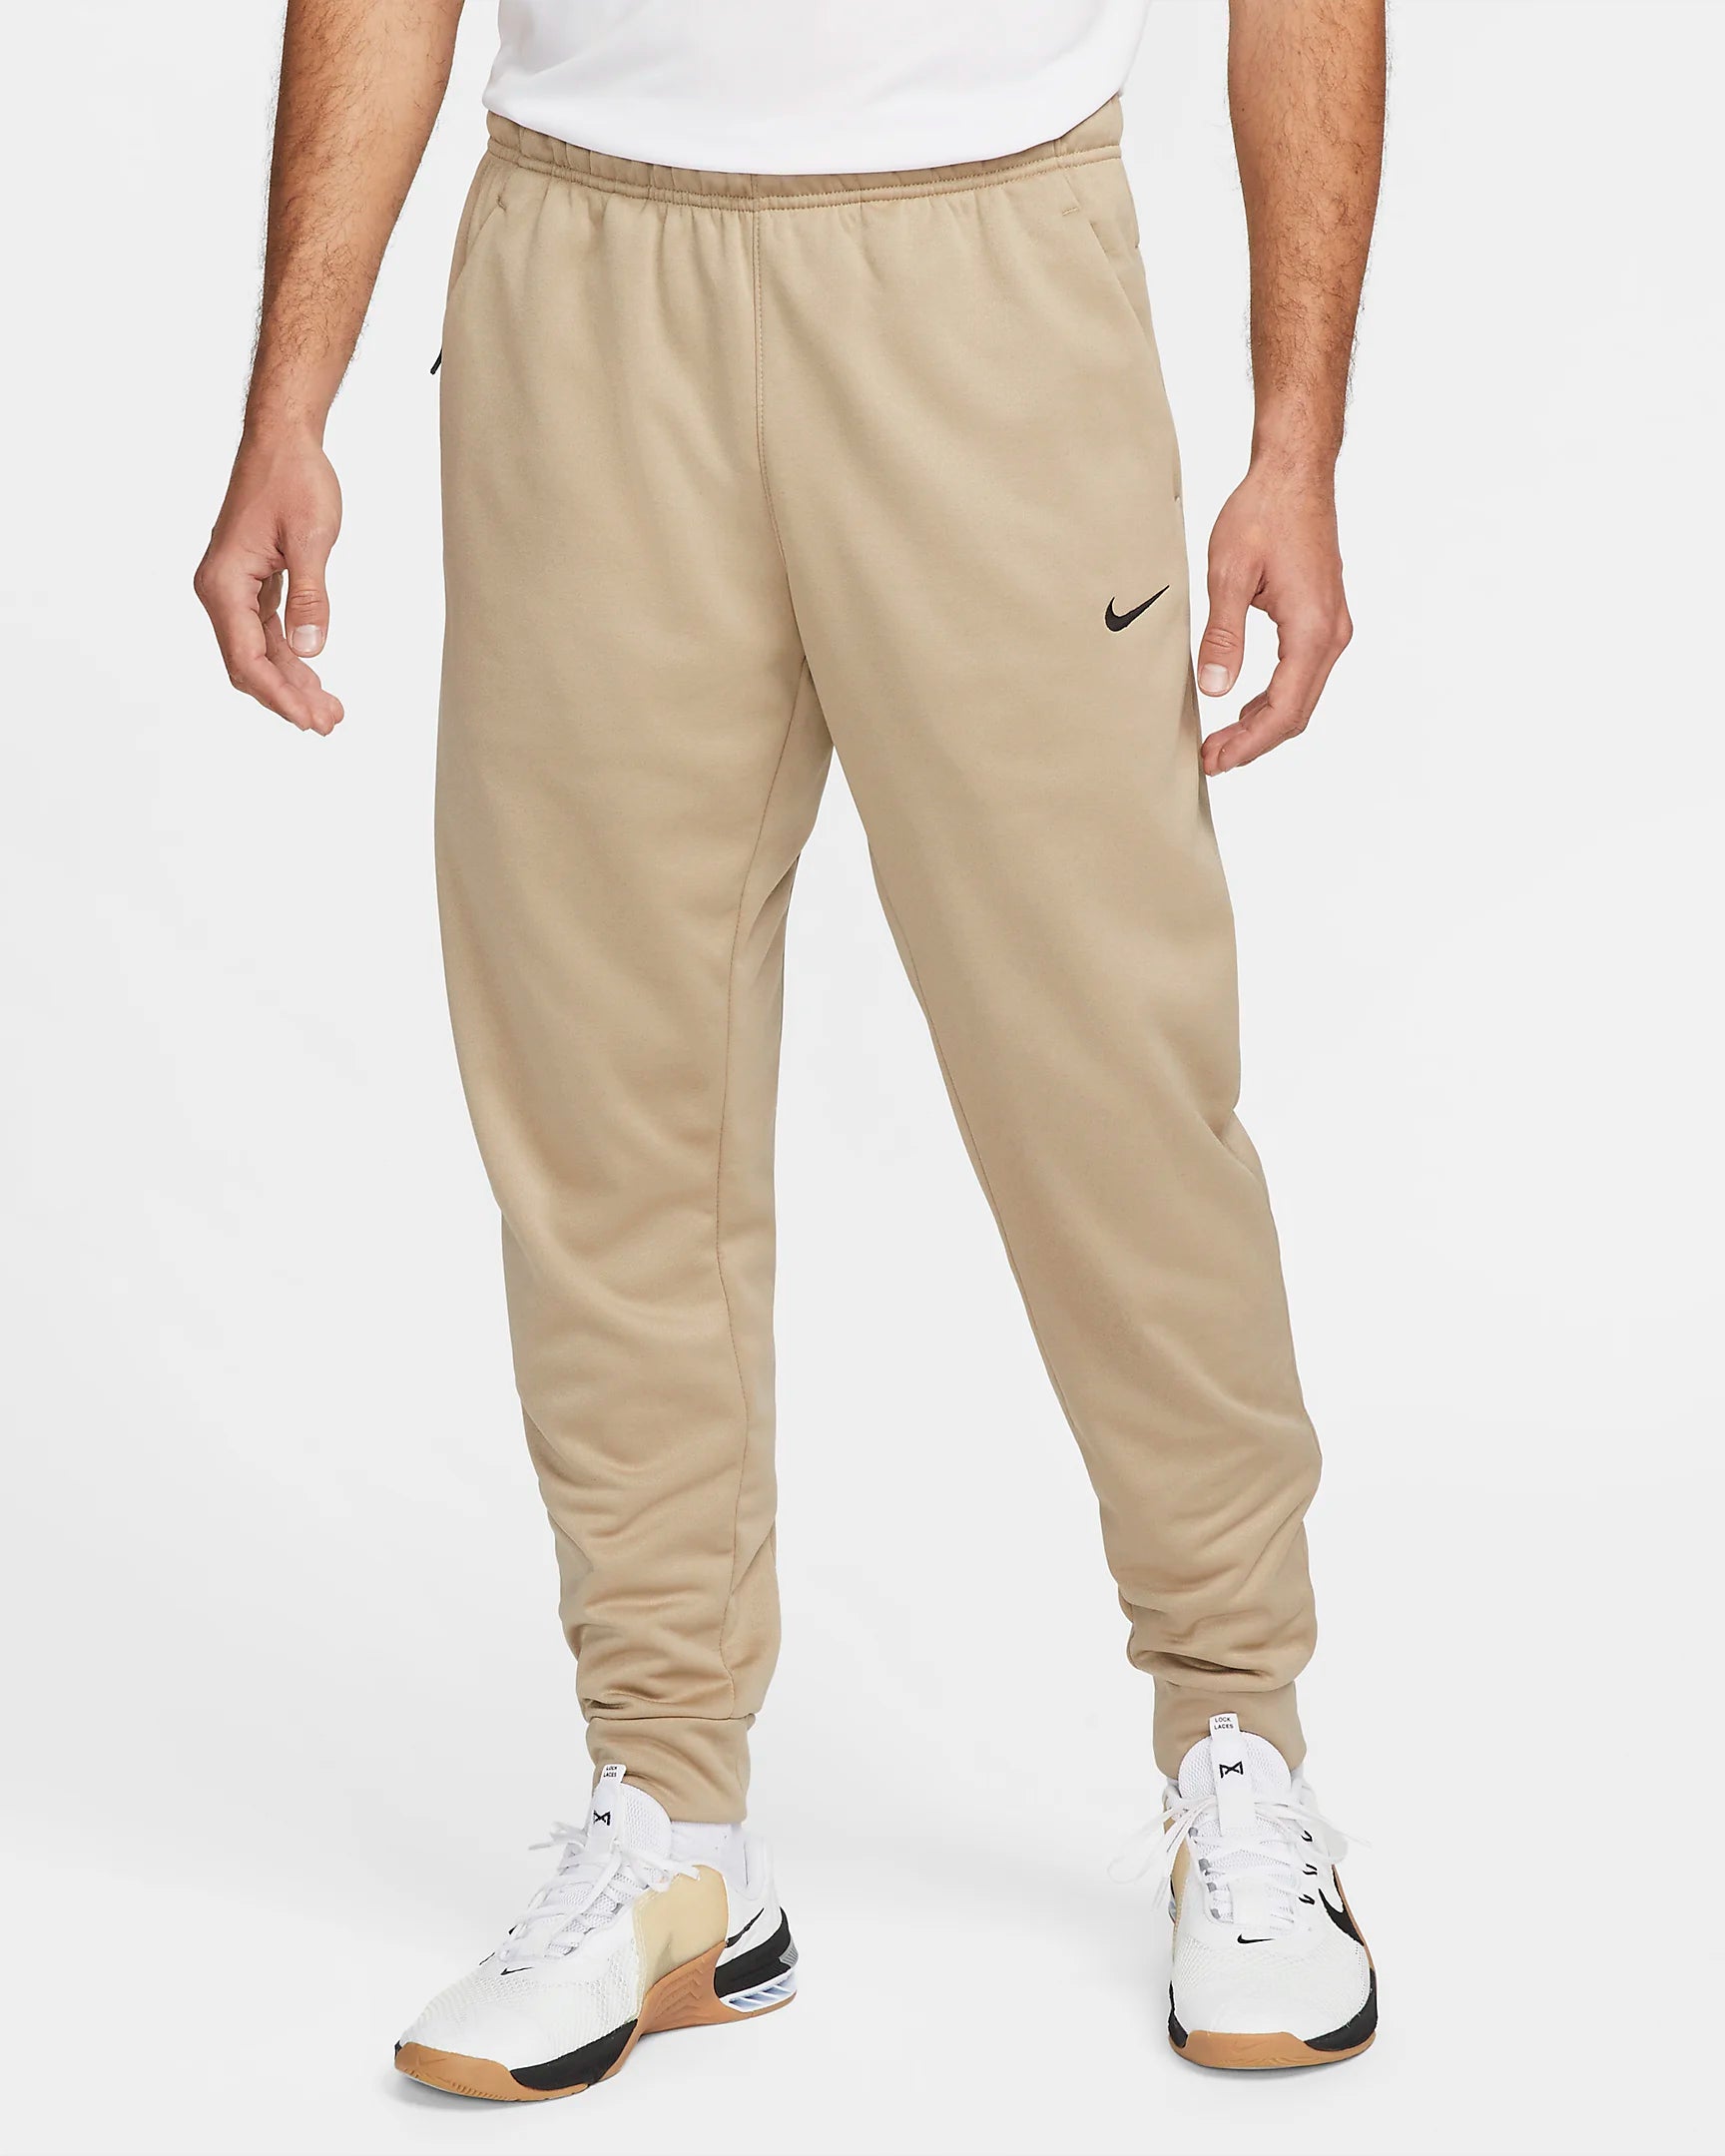 Pantalon Nike Therma - Beige